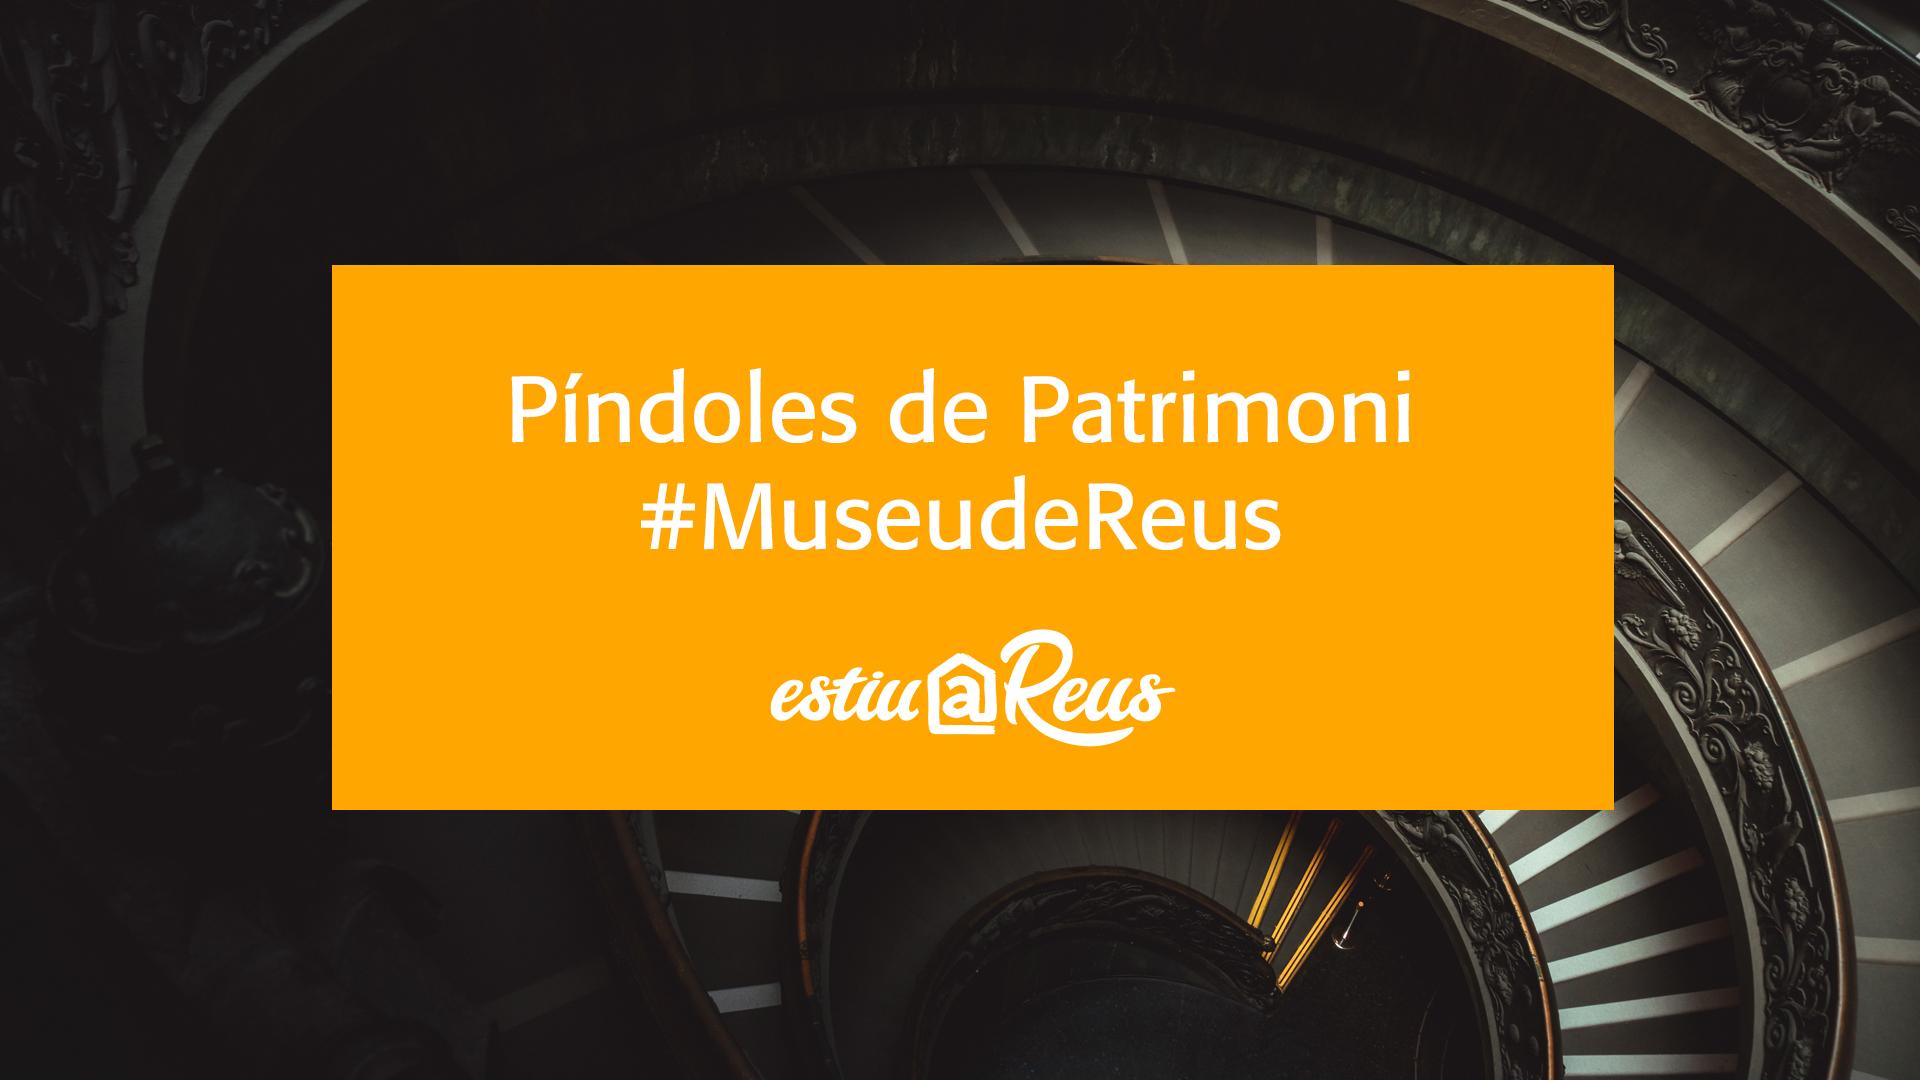 Museu de Reus: Píndoles de Patrimoni